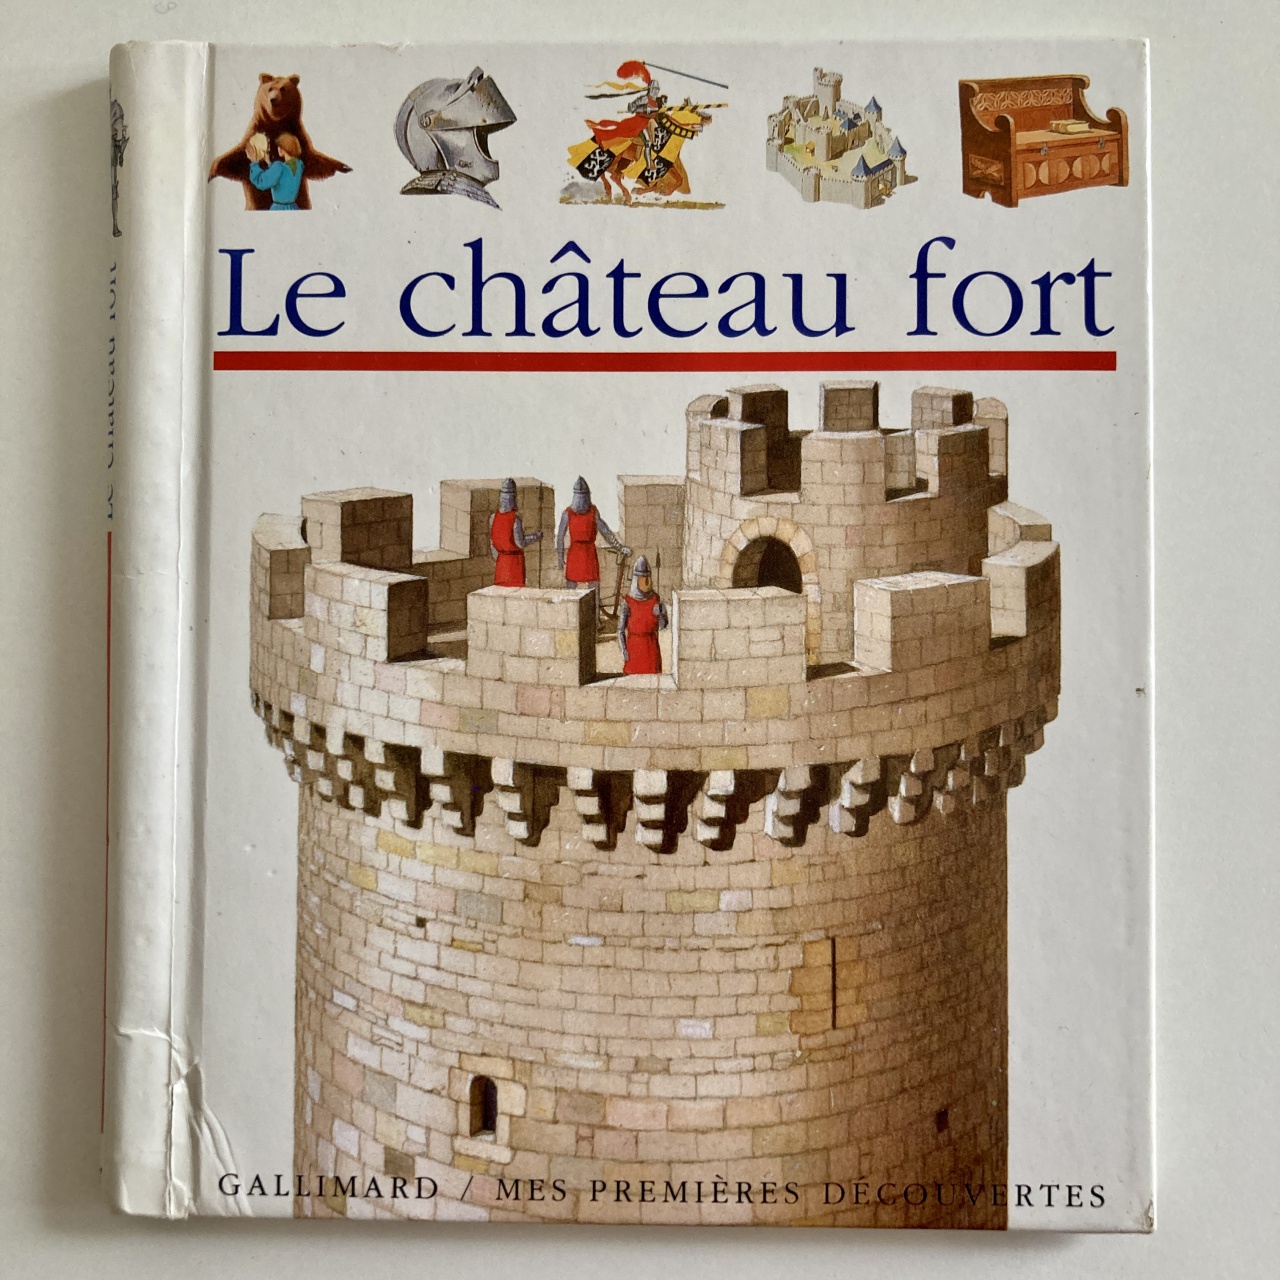 Le Chateau fort